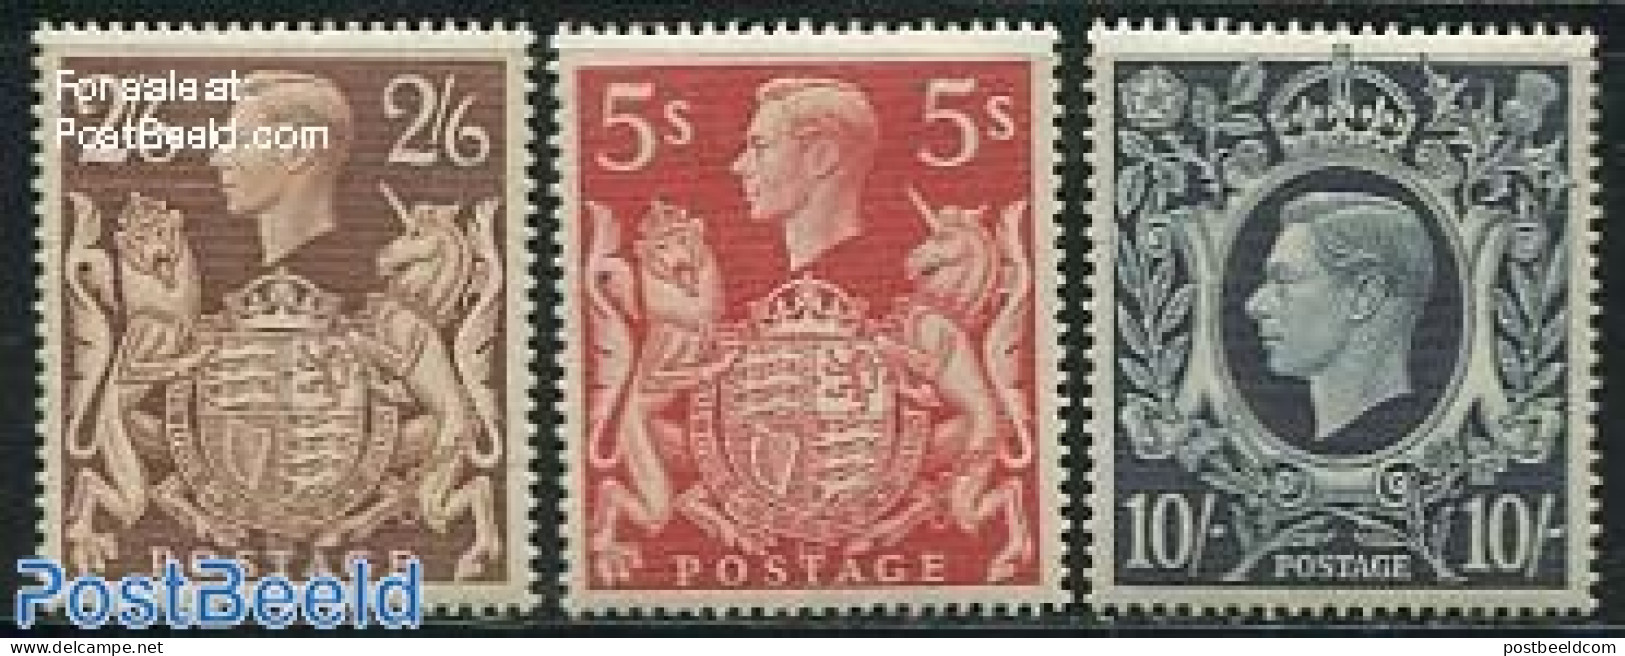 Great Britain 1939 Definitives 3v, Mint NH - Ungebraucht